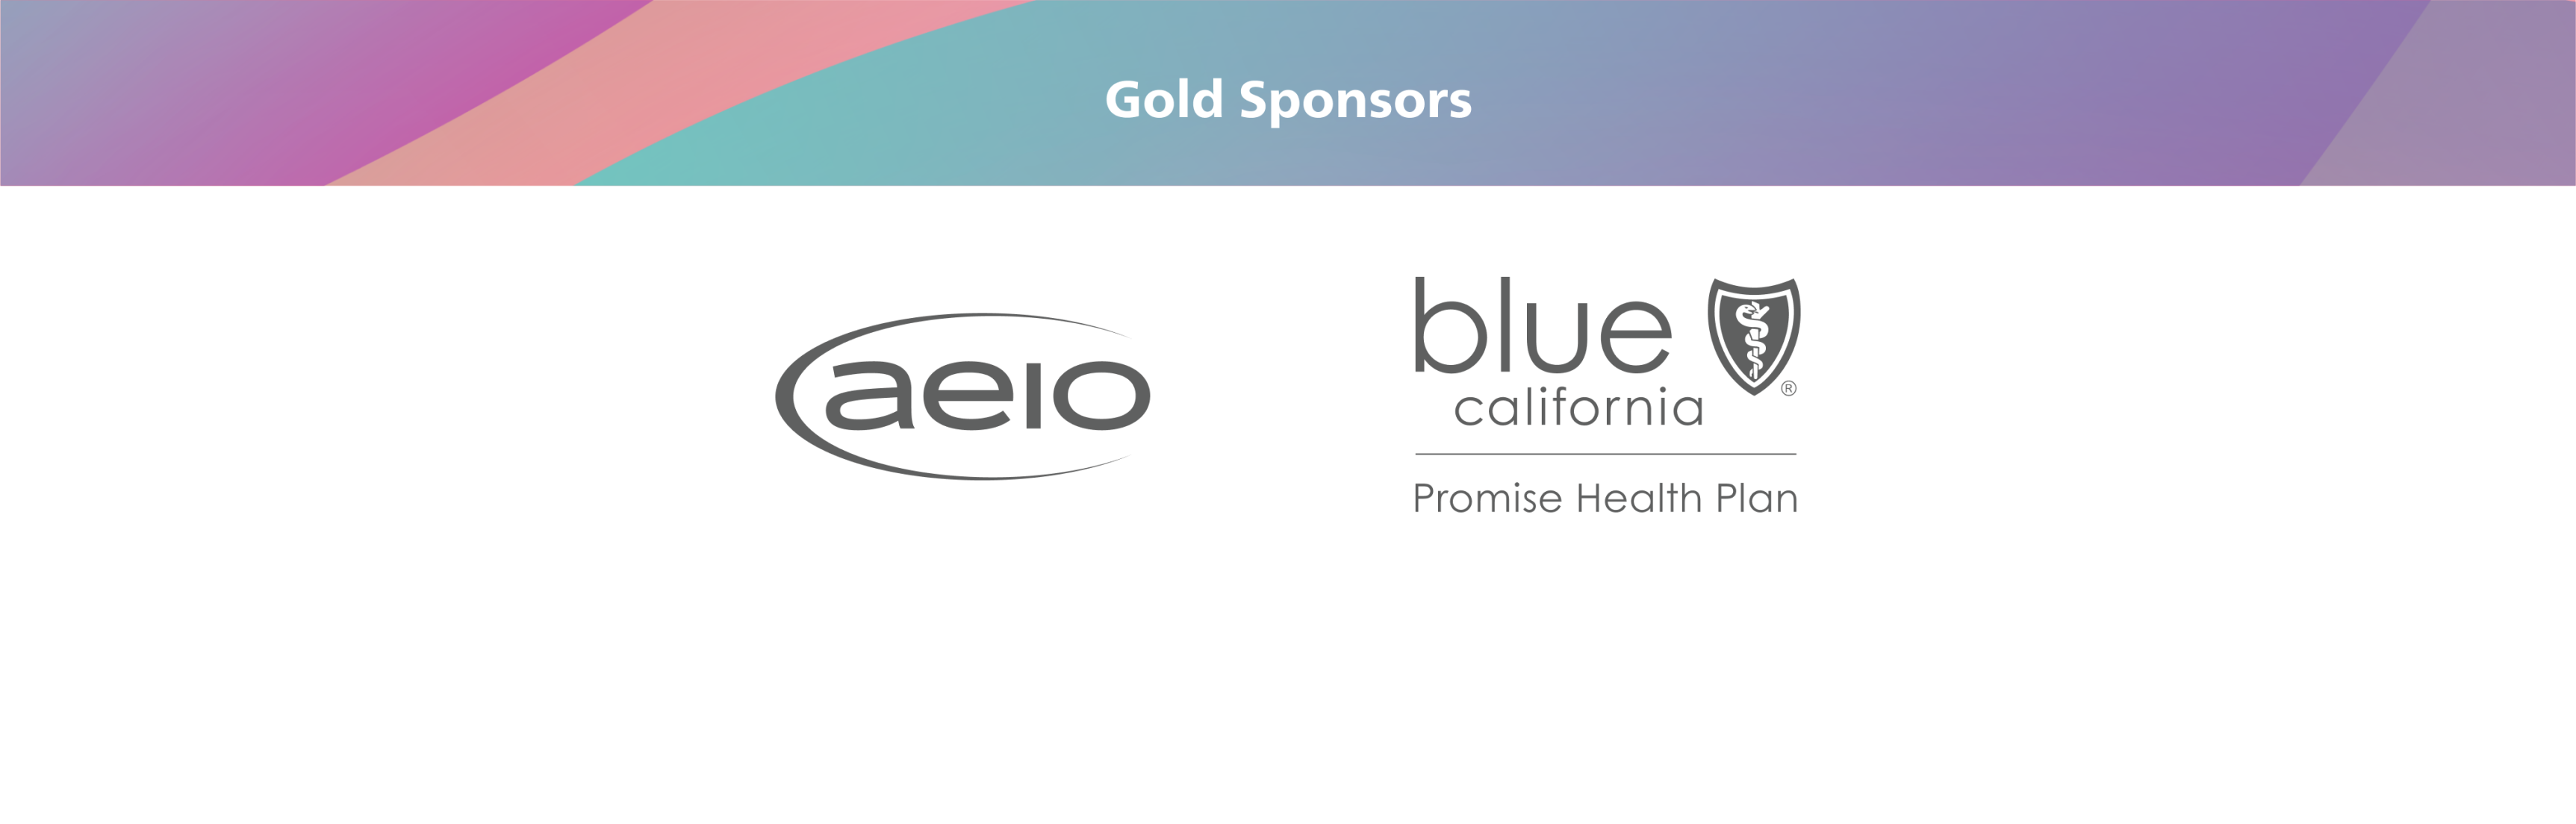 Dream Show Gold Sponsors AEIO and Blue Shield of California